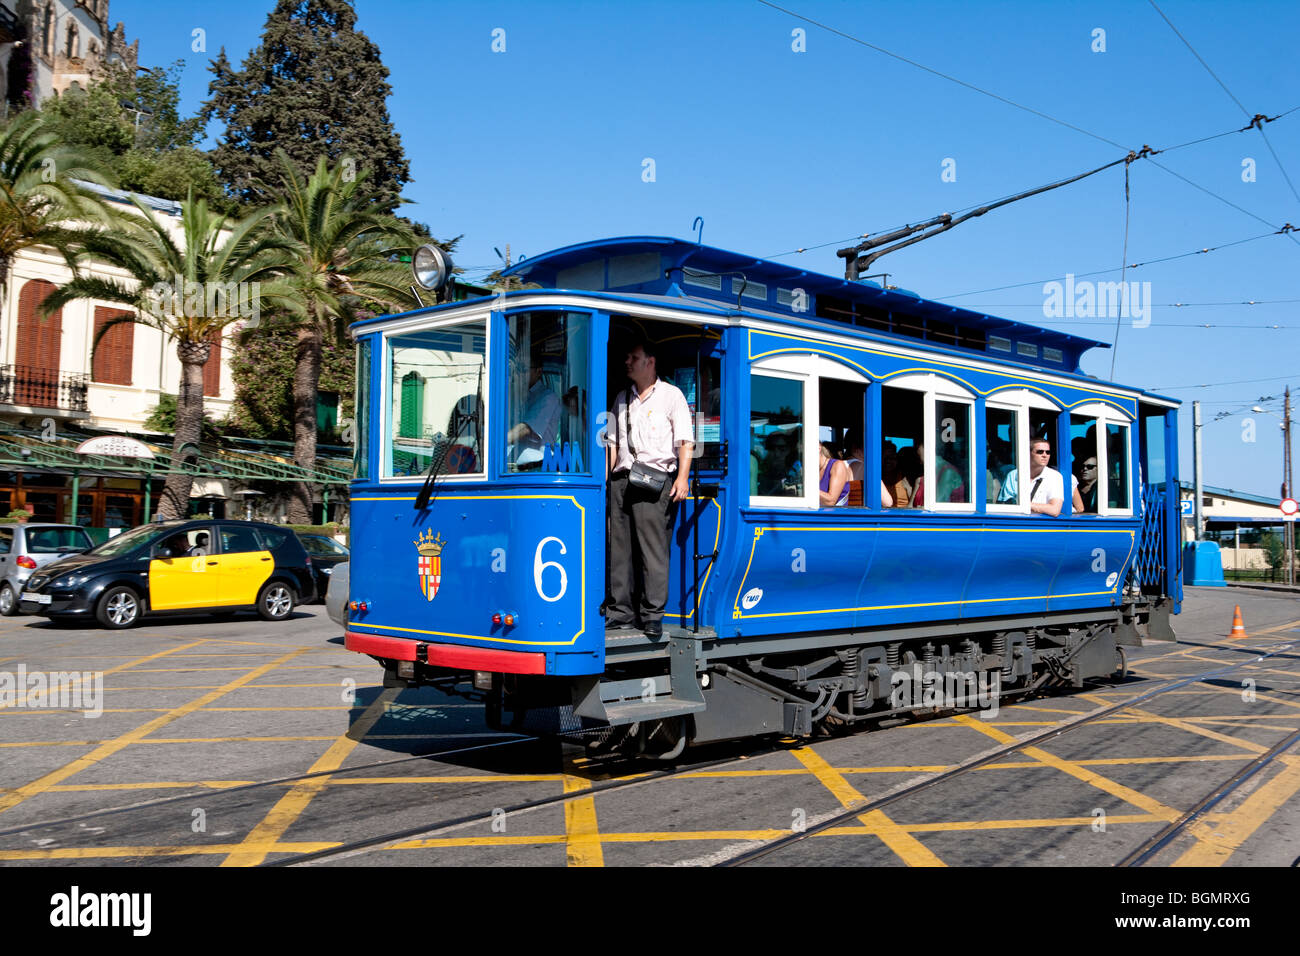 Barcelona - Tramvia Blau (blue tram) in Tibidabo Stock Photo - Alamy